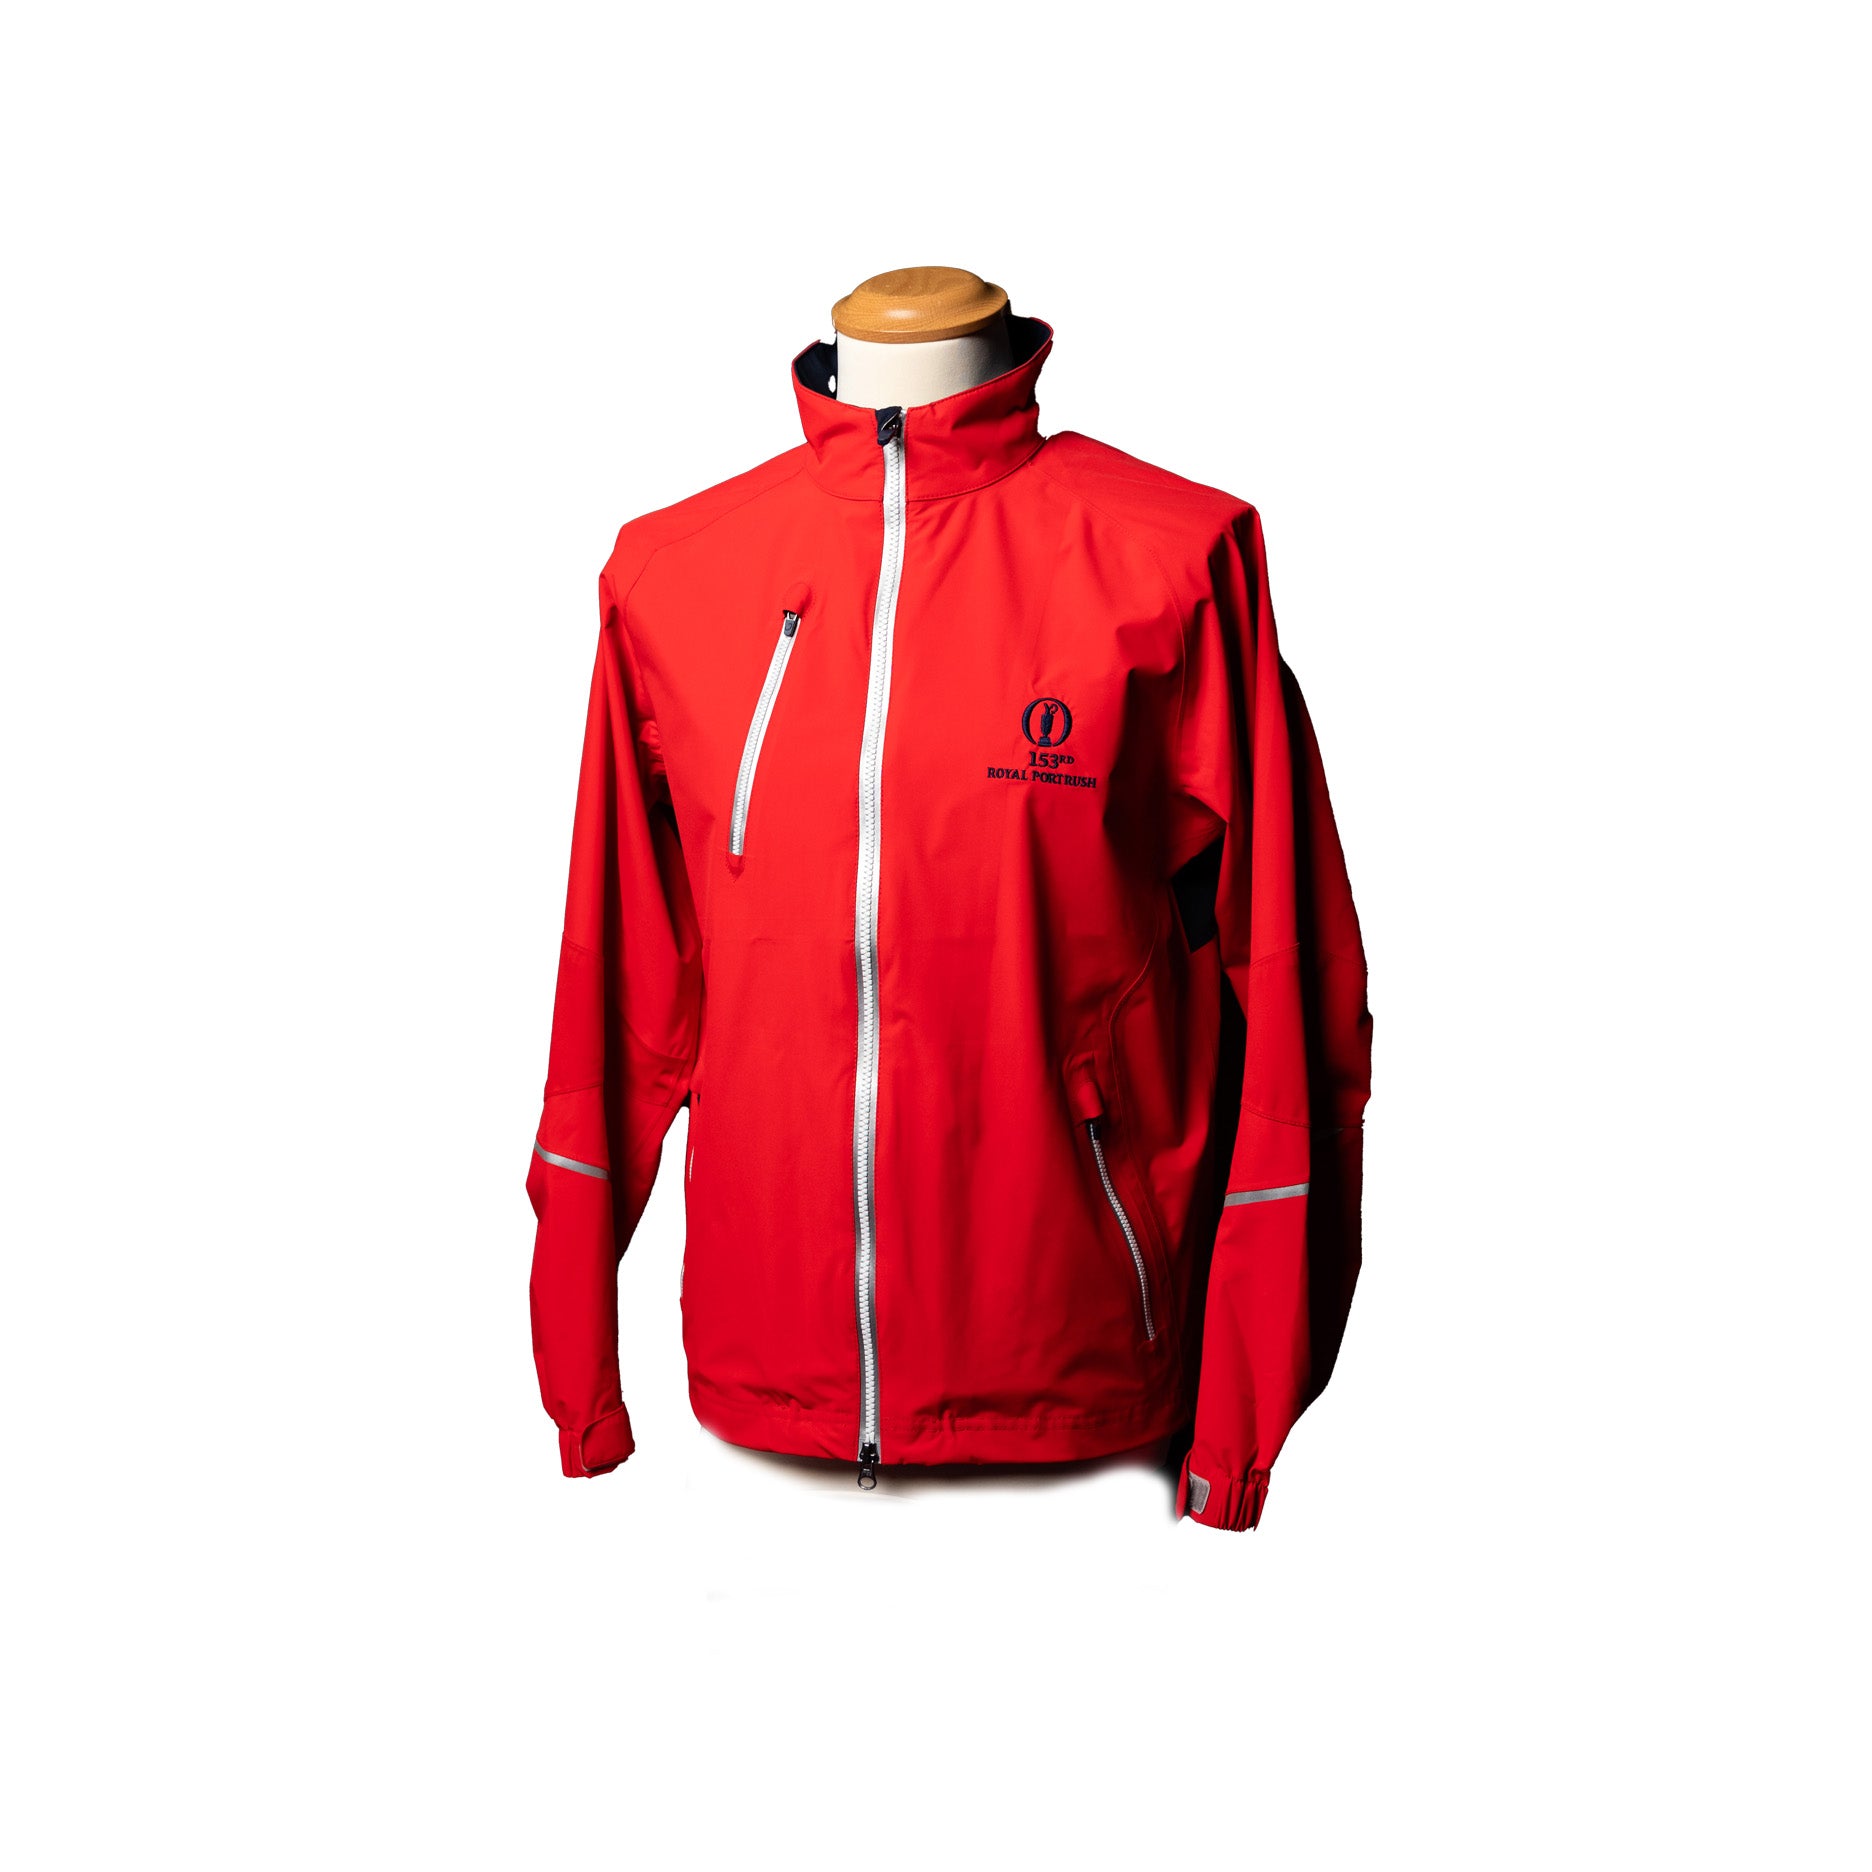 Royal Portrush 153rd Open Full Zip Zero Restriction Waterproof Jacket - Red